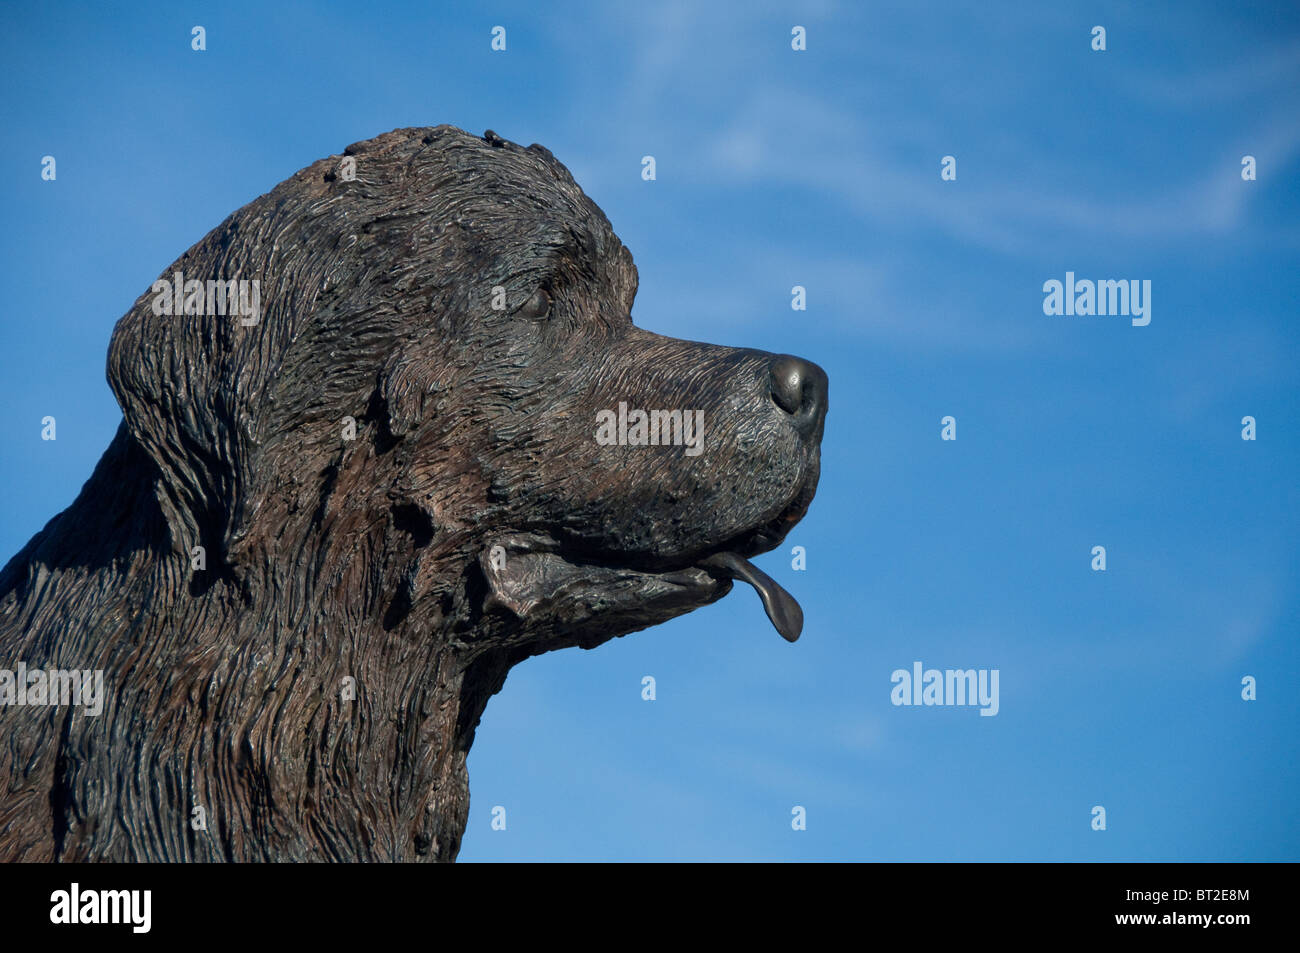 Newfoundland And Labrador Dog High Resolution Stock Photography And Images Alamy